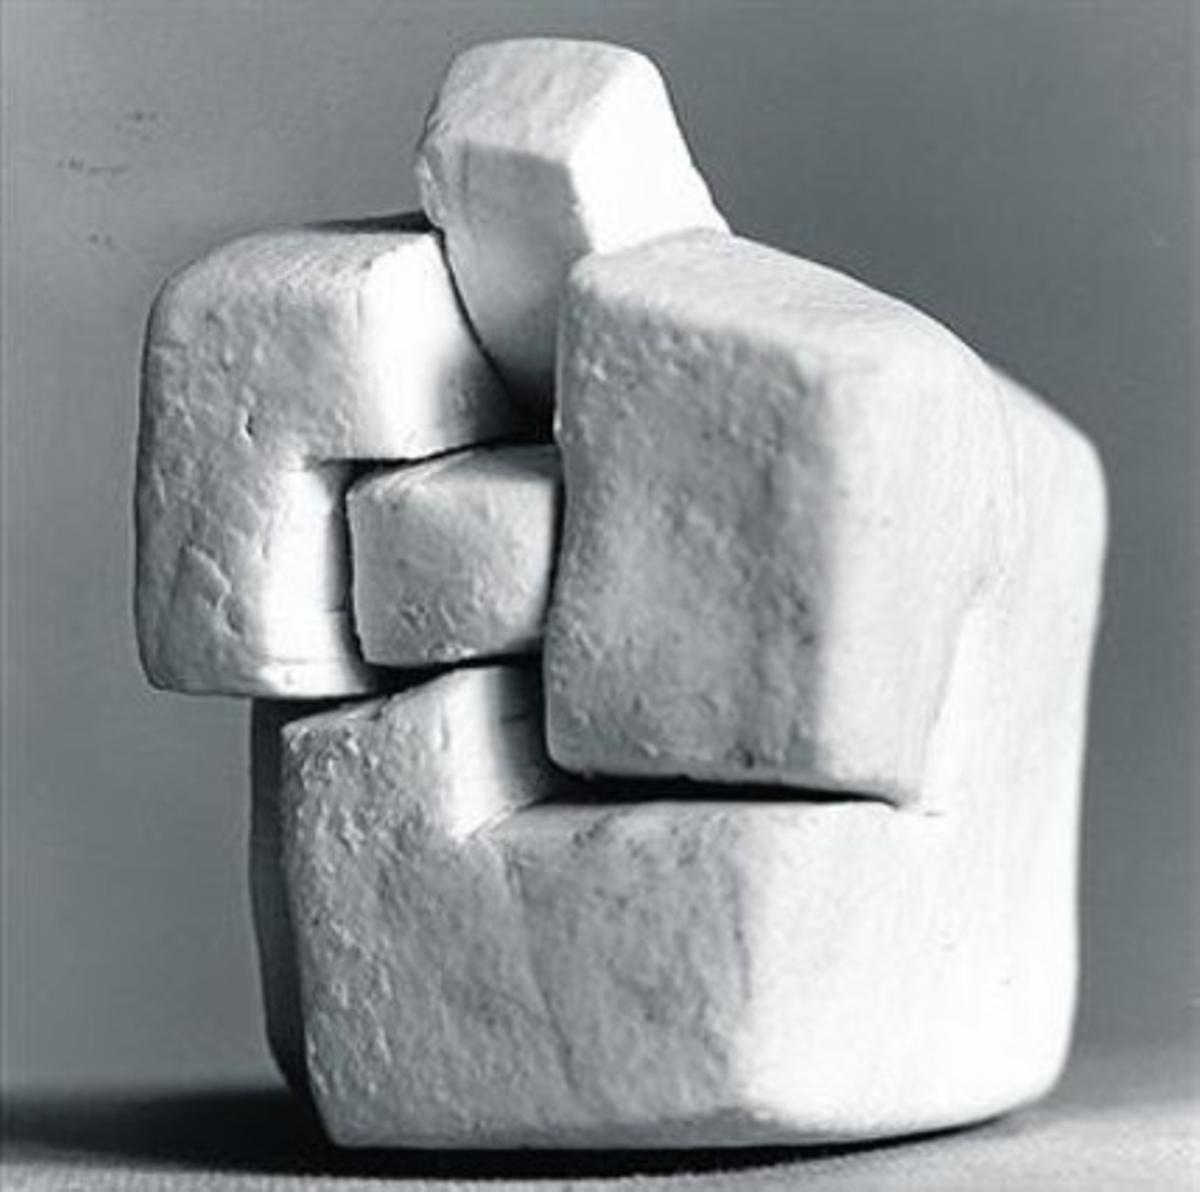 La pequeña escultura ’Porcelana V’, realizada por Chillida en 1977.